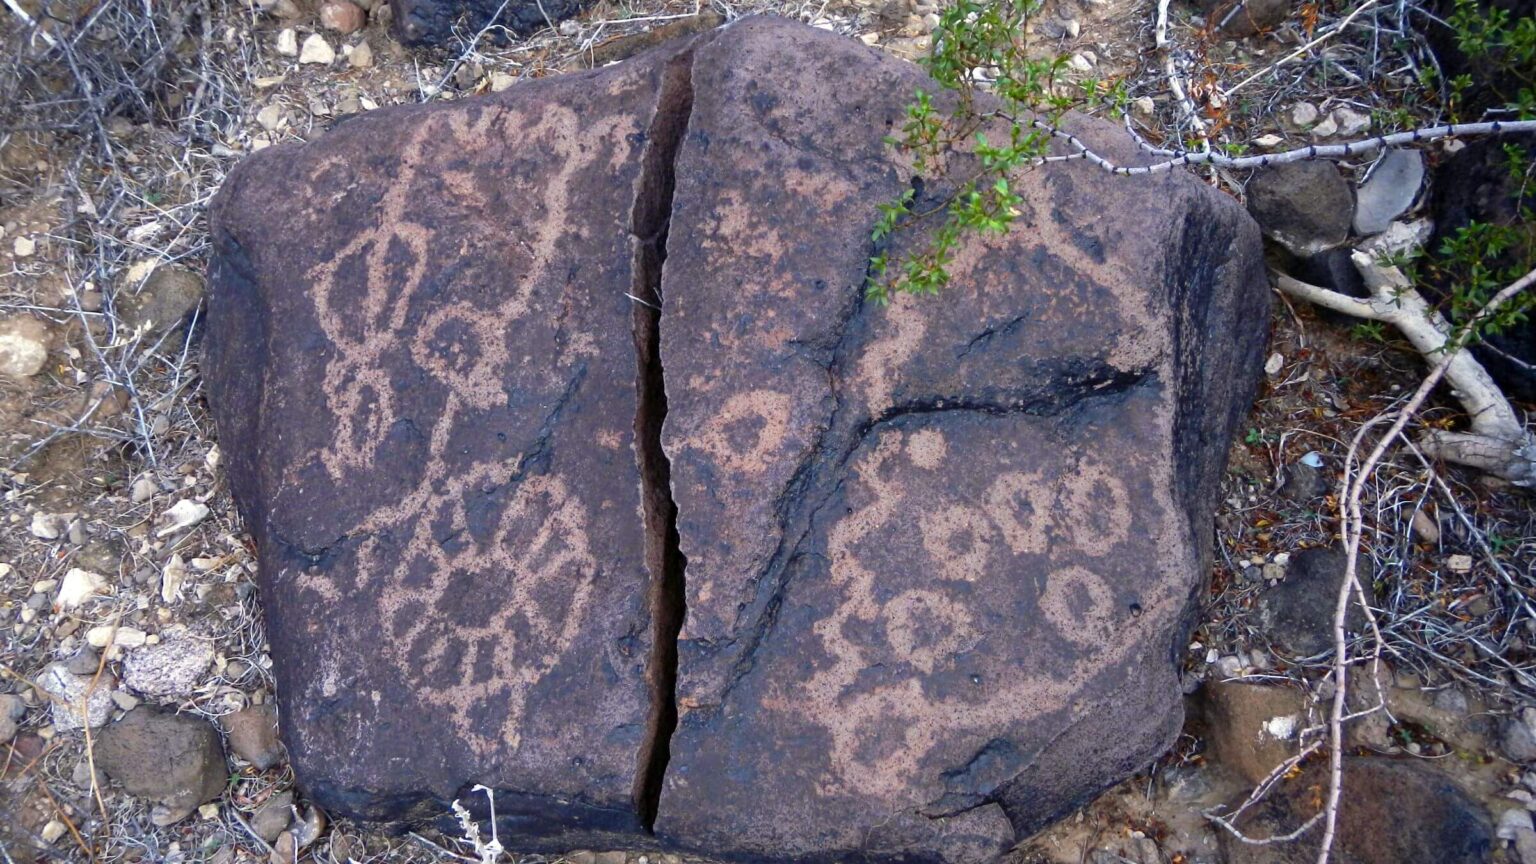 Cabeza Prieta Wilderness, Charlie Bell Well archaic petroglyphs, January